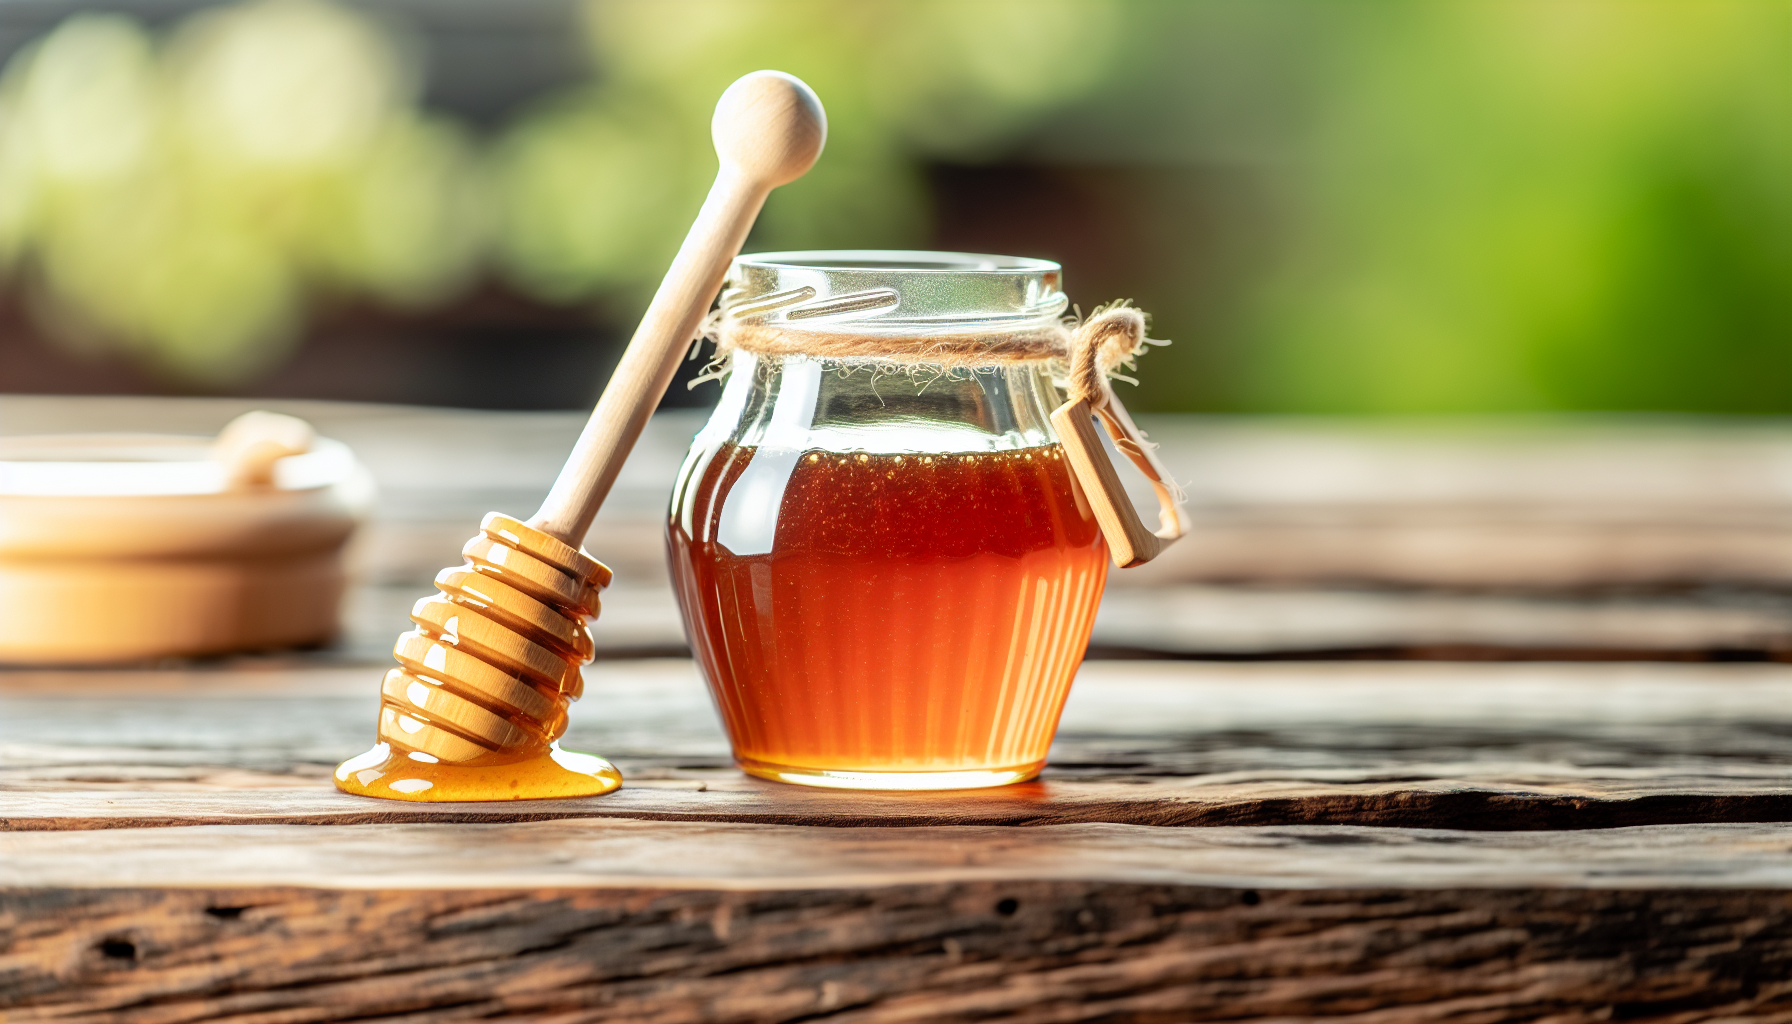 A jar of manuka honey with a wooden honey dipper